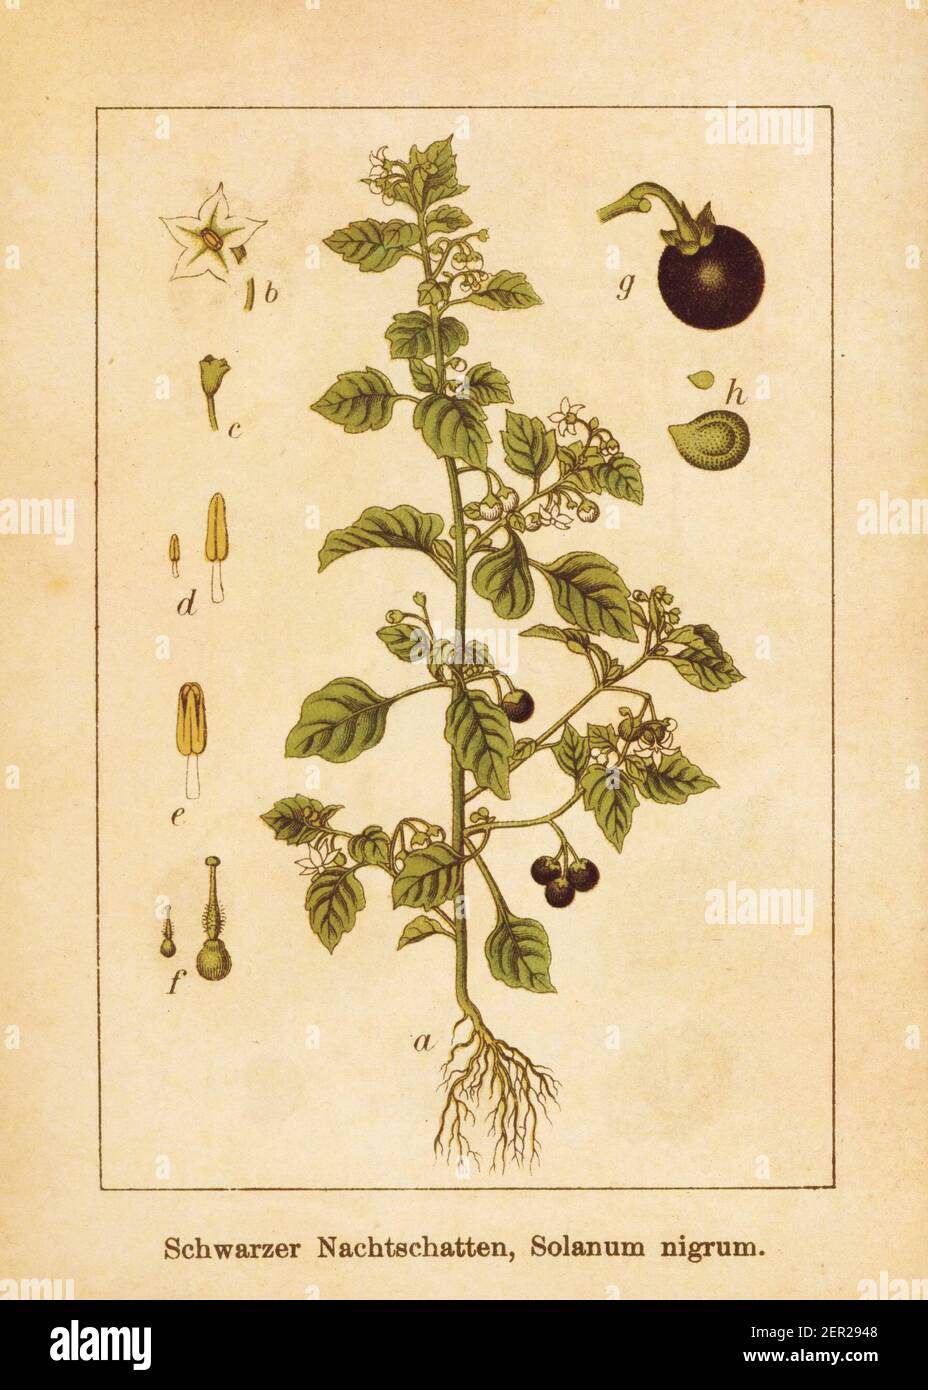 Antique illustration of a solanum nigrum, also known as black nightshade, European black nightshade, duscle, garden nightshade, hound's berry, petty m Stock Photo